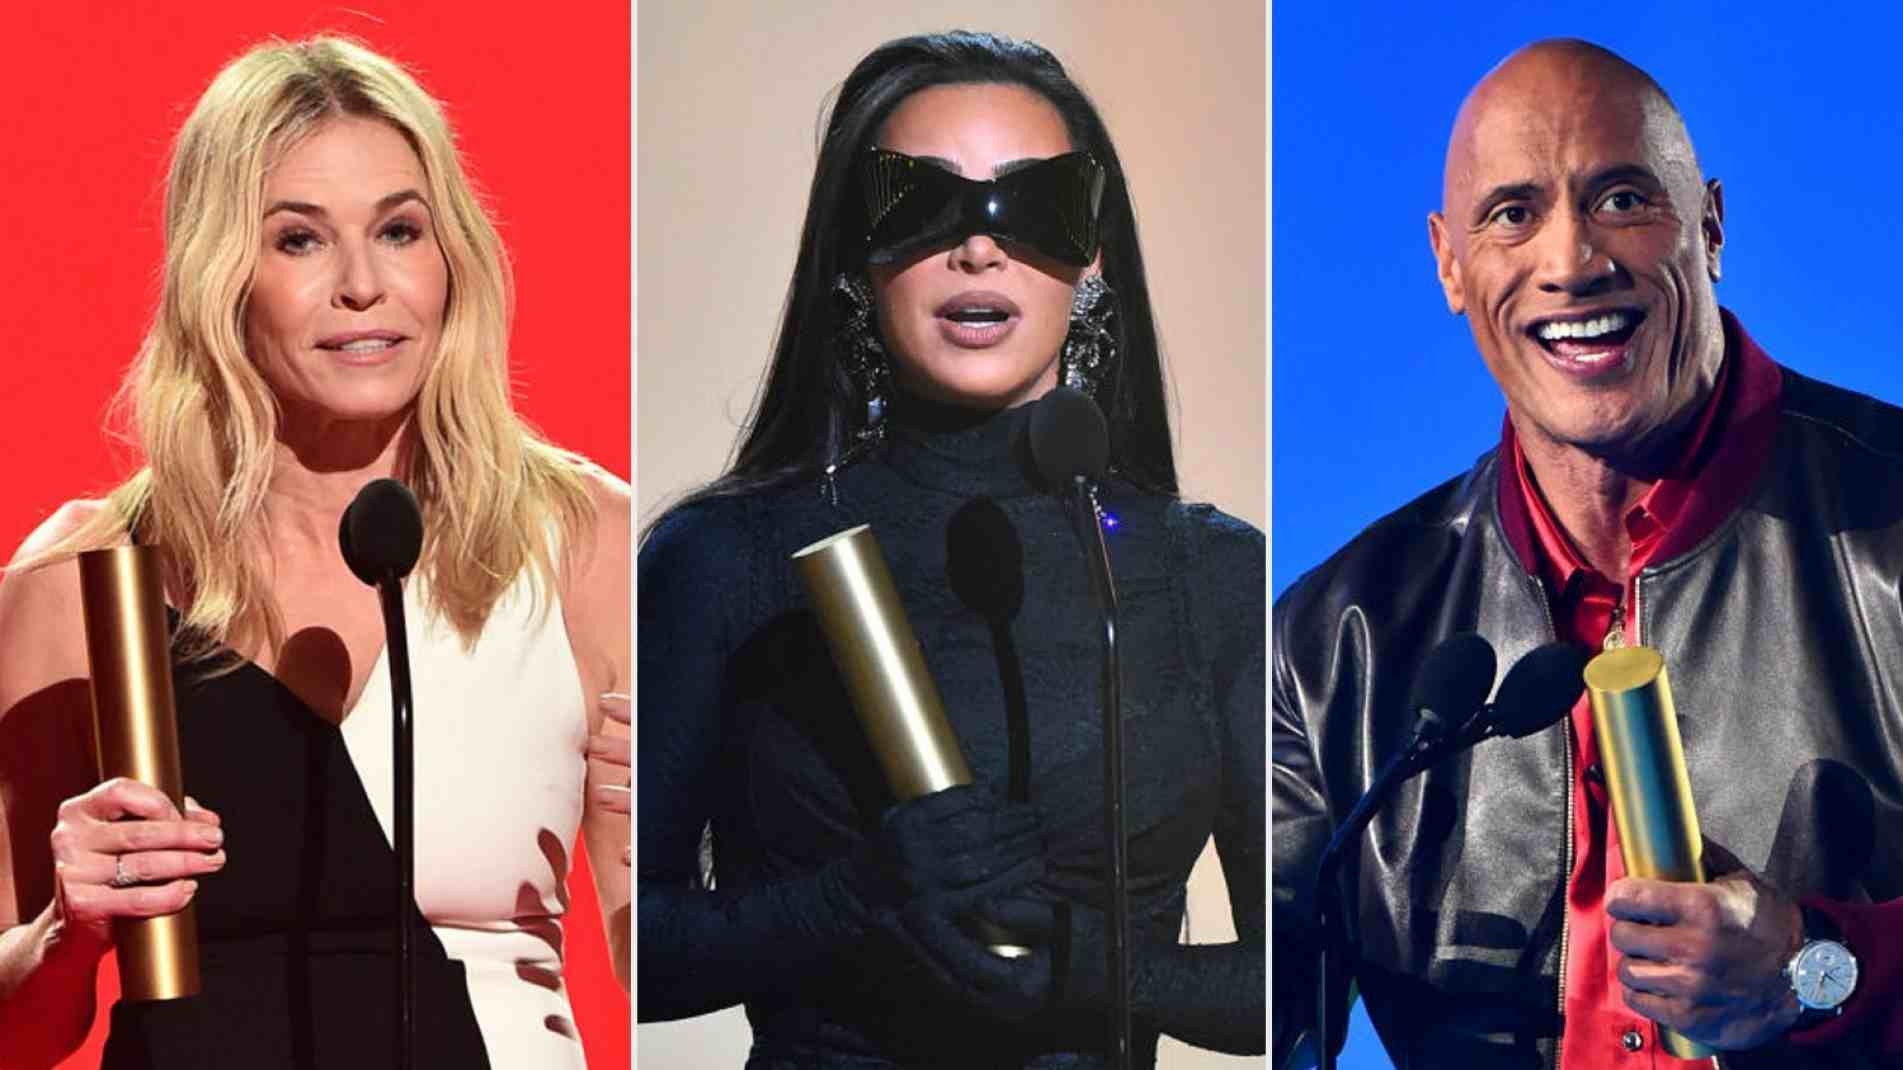 Chelsea Handler, Kim Kardashian West, e Dwayne Johnson no People's Choice Awards 2021